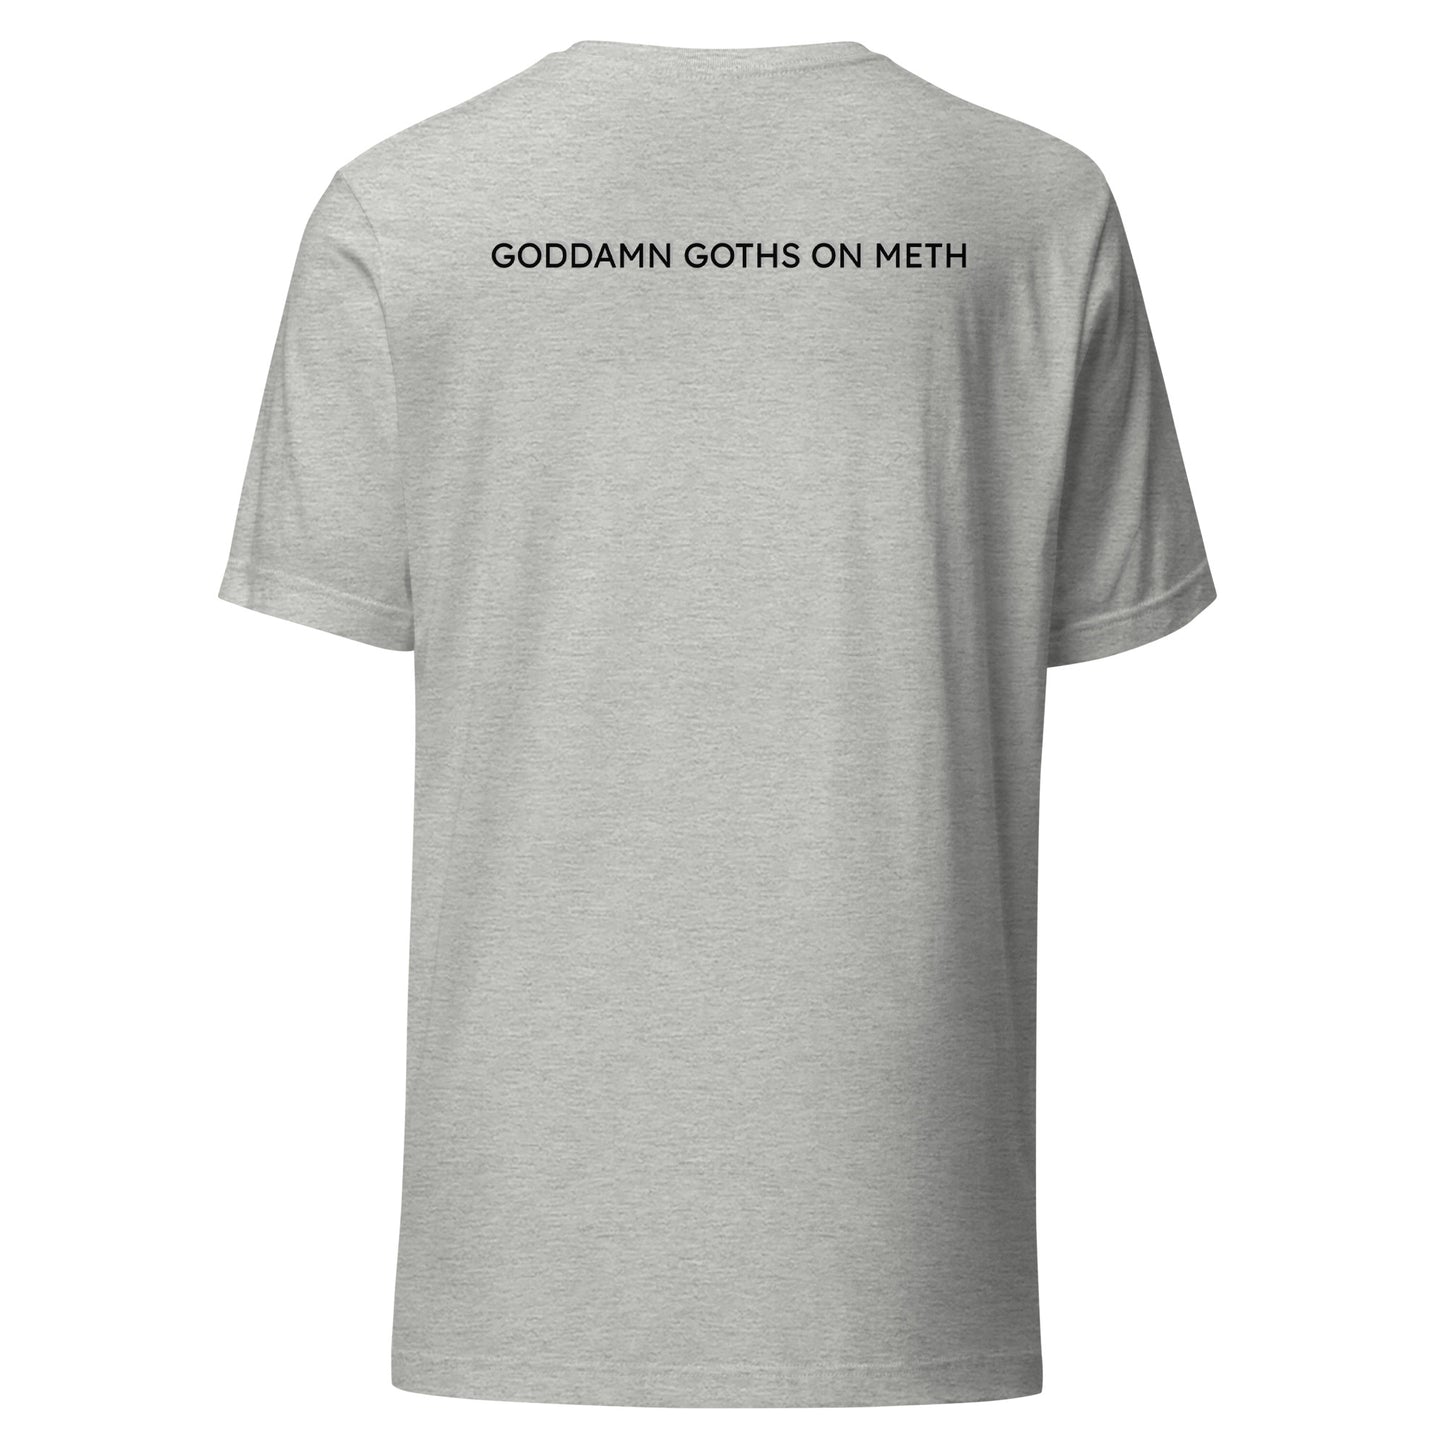 TANG M<ETHOD DONG MOSH - Unisex t-shirt